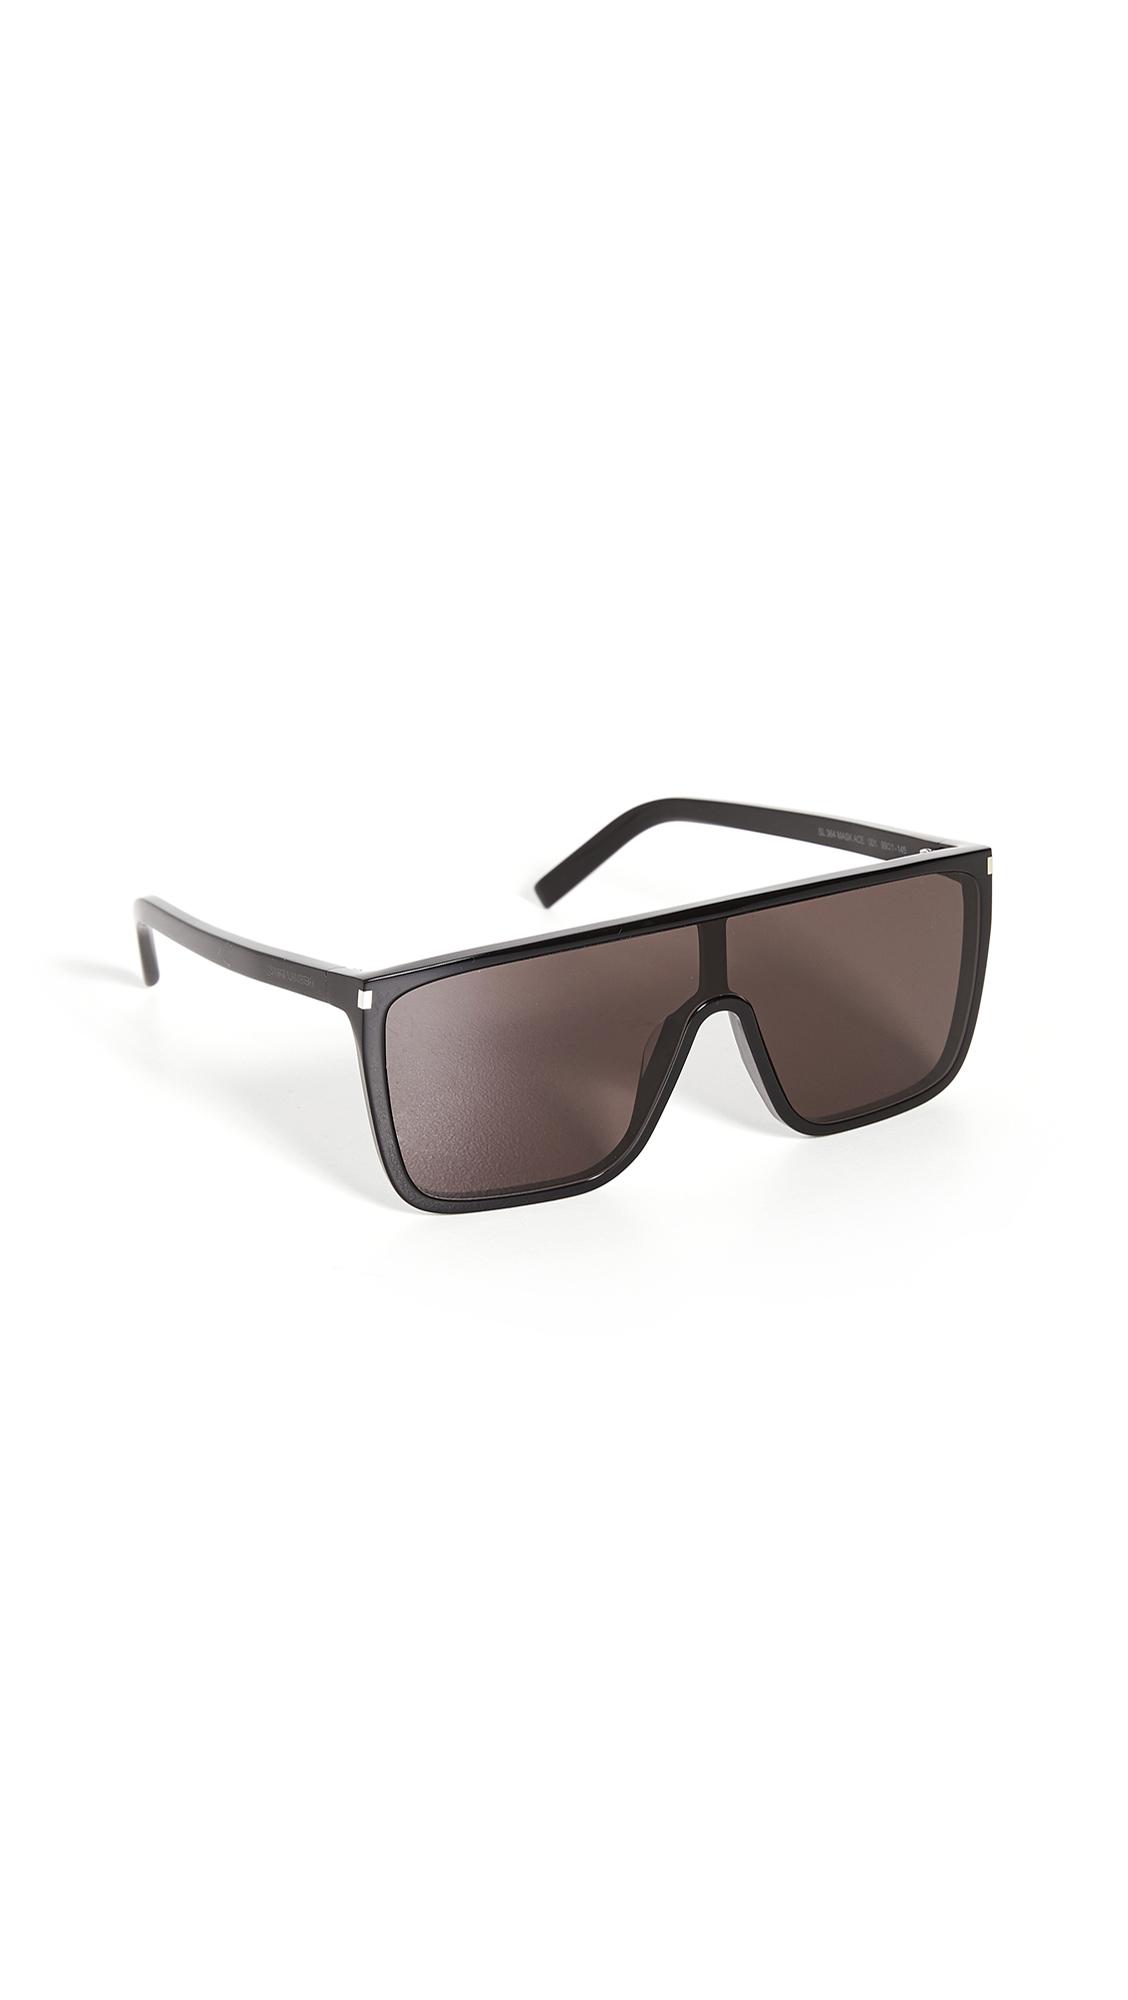 Saint Laurent Sl364 Mask Ace Sunglasses in Black/Black/Black 